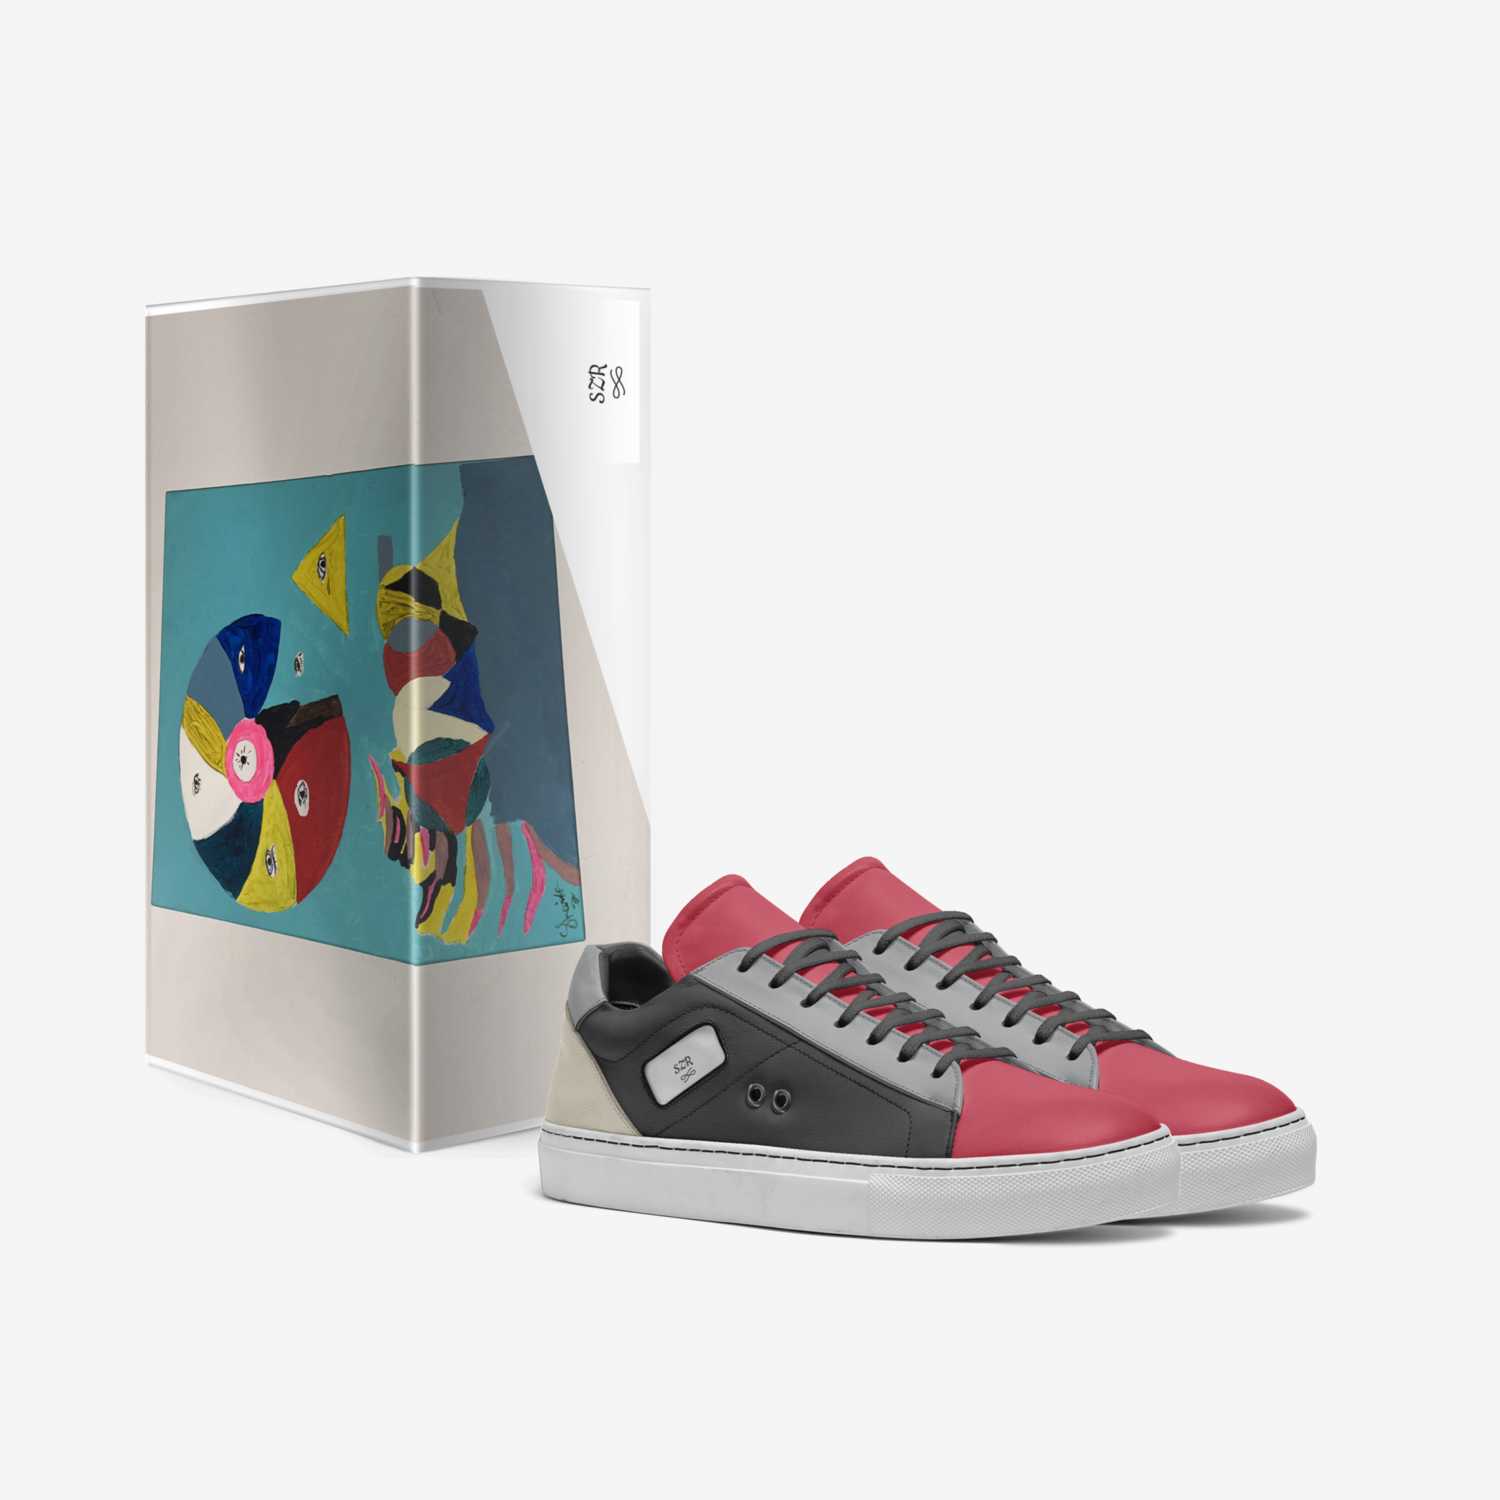 SZR  custom made in Italy shoes by Sharika Robinson | Box view